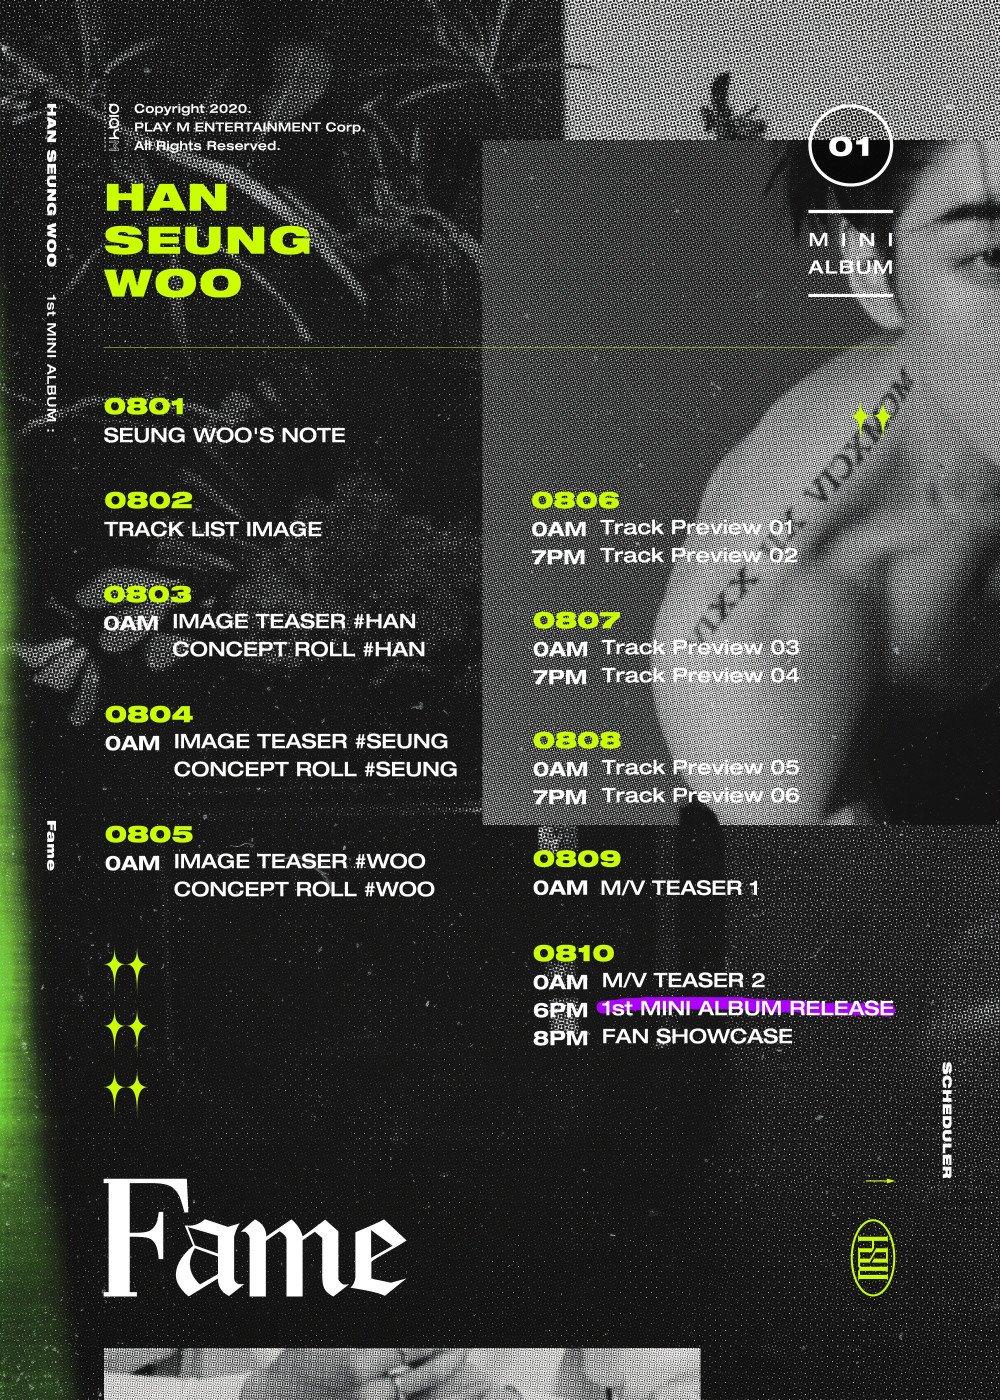 victon-seung-woo-teaser-schedule-debut-album-fame-2